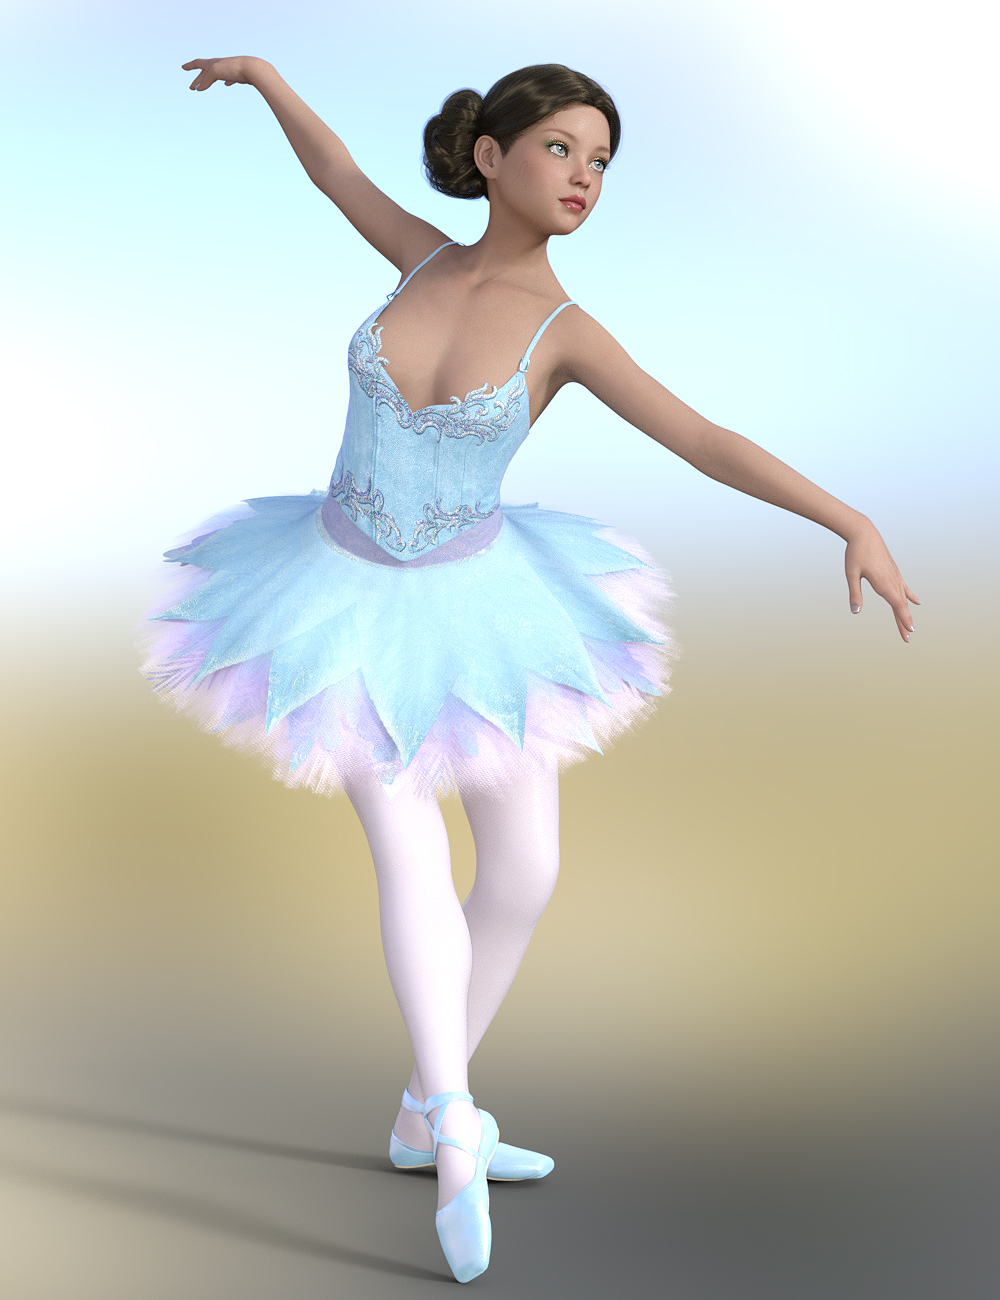 dForce Classic Ballet Outfit Textures Vol 2